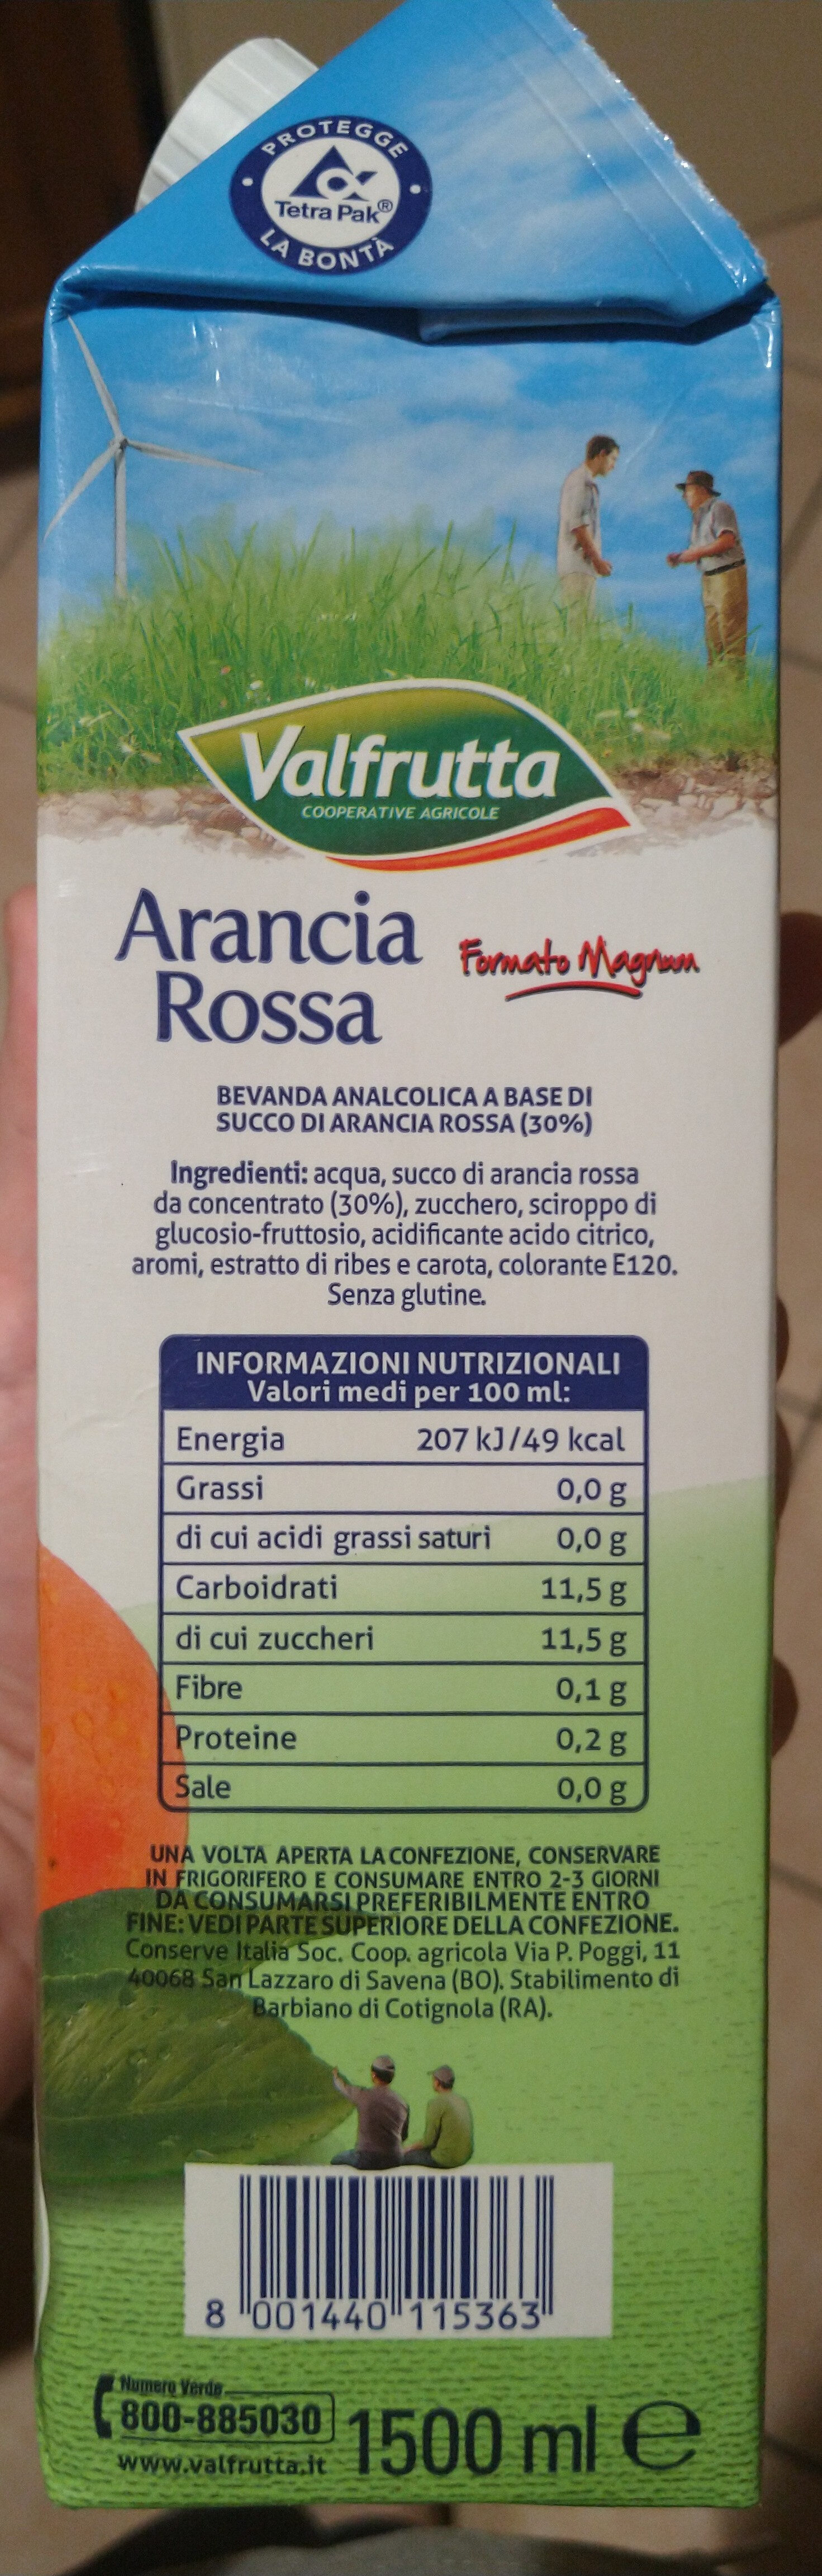 Valfrutta Arancia Rossa Formato Magnum - Ingredienti